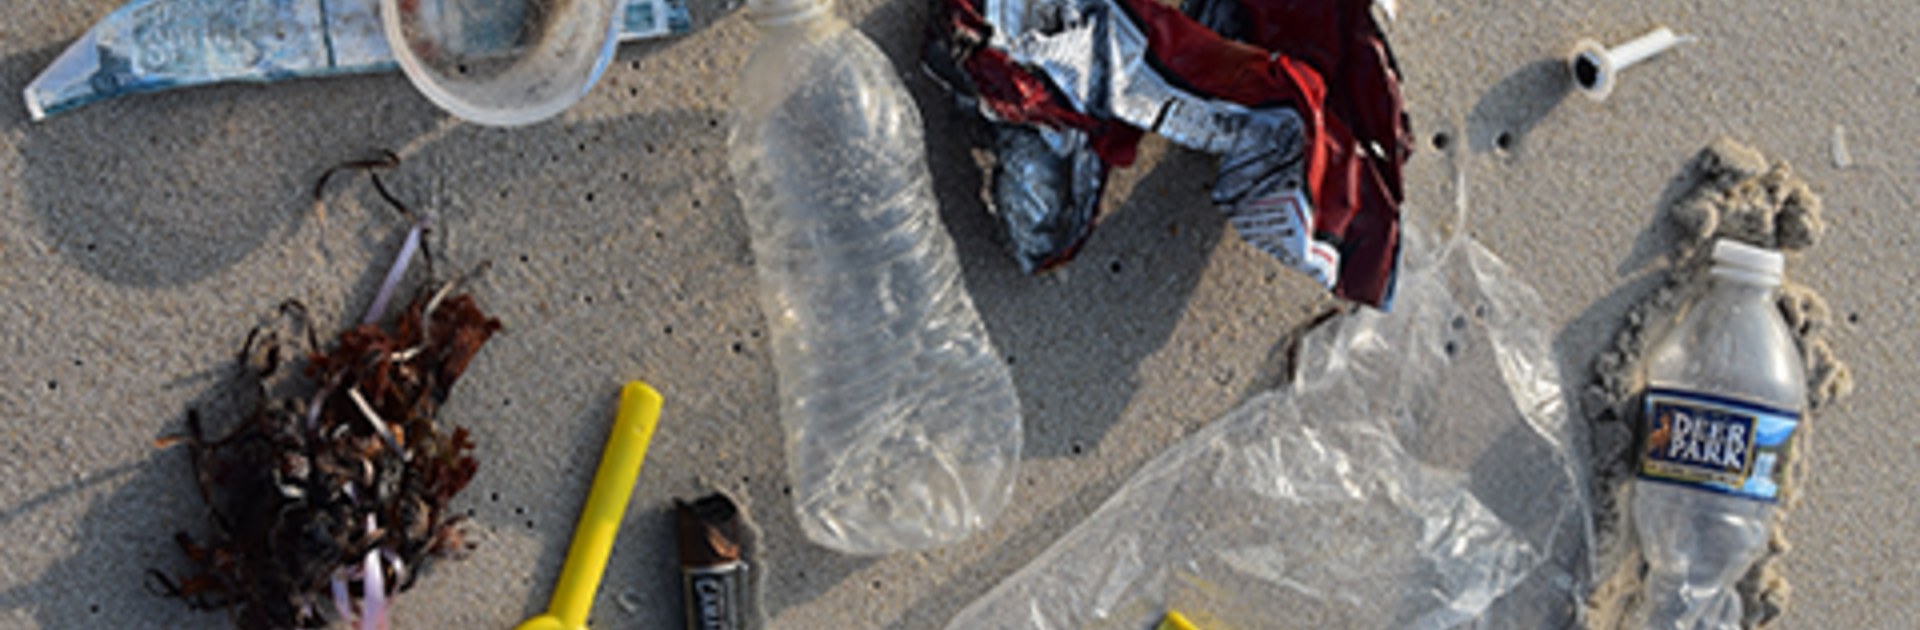 plastic waste on the beach sand